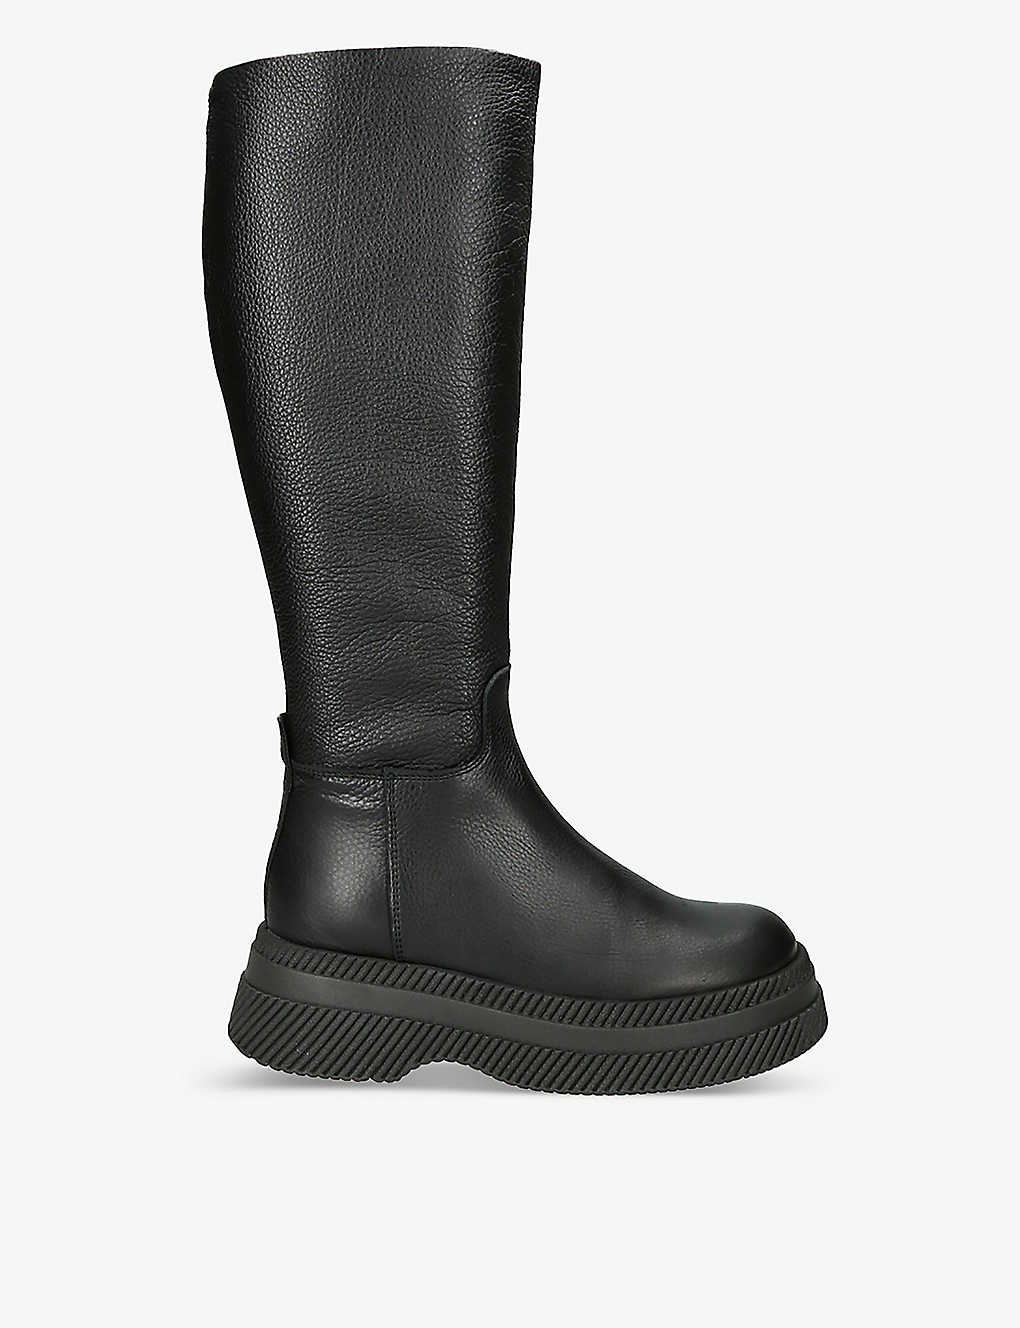 Steve Madden Womens Black Gylana Lug-sole Leather Knee-high Boots